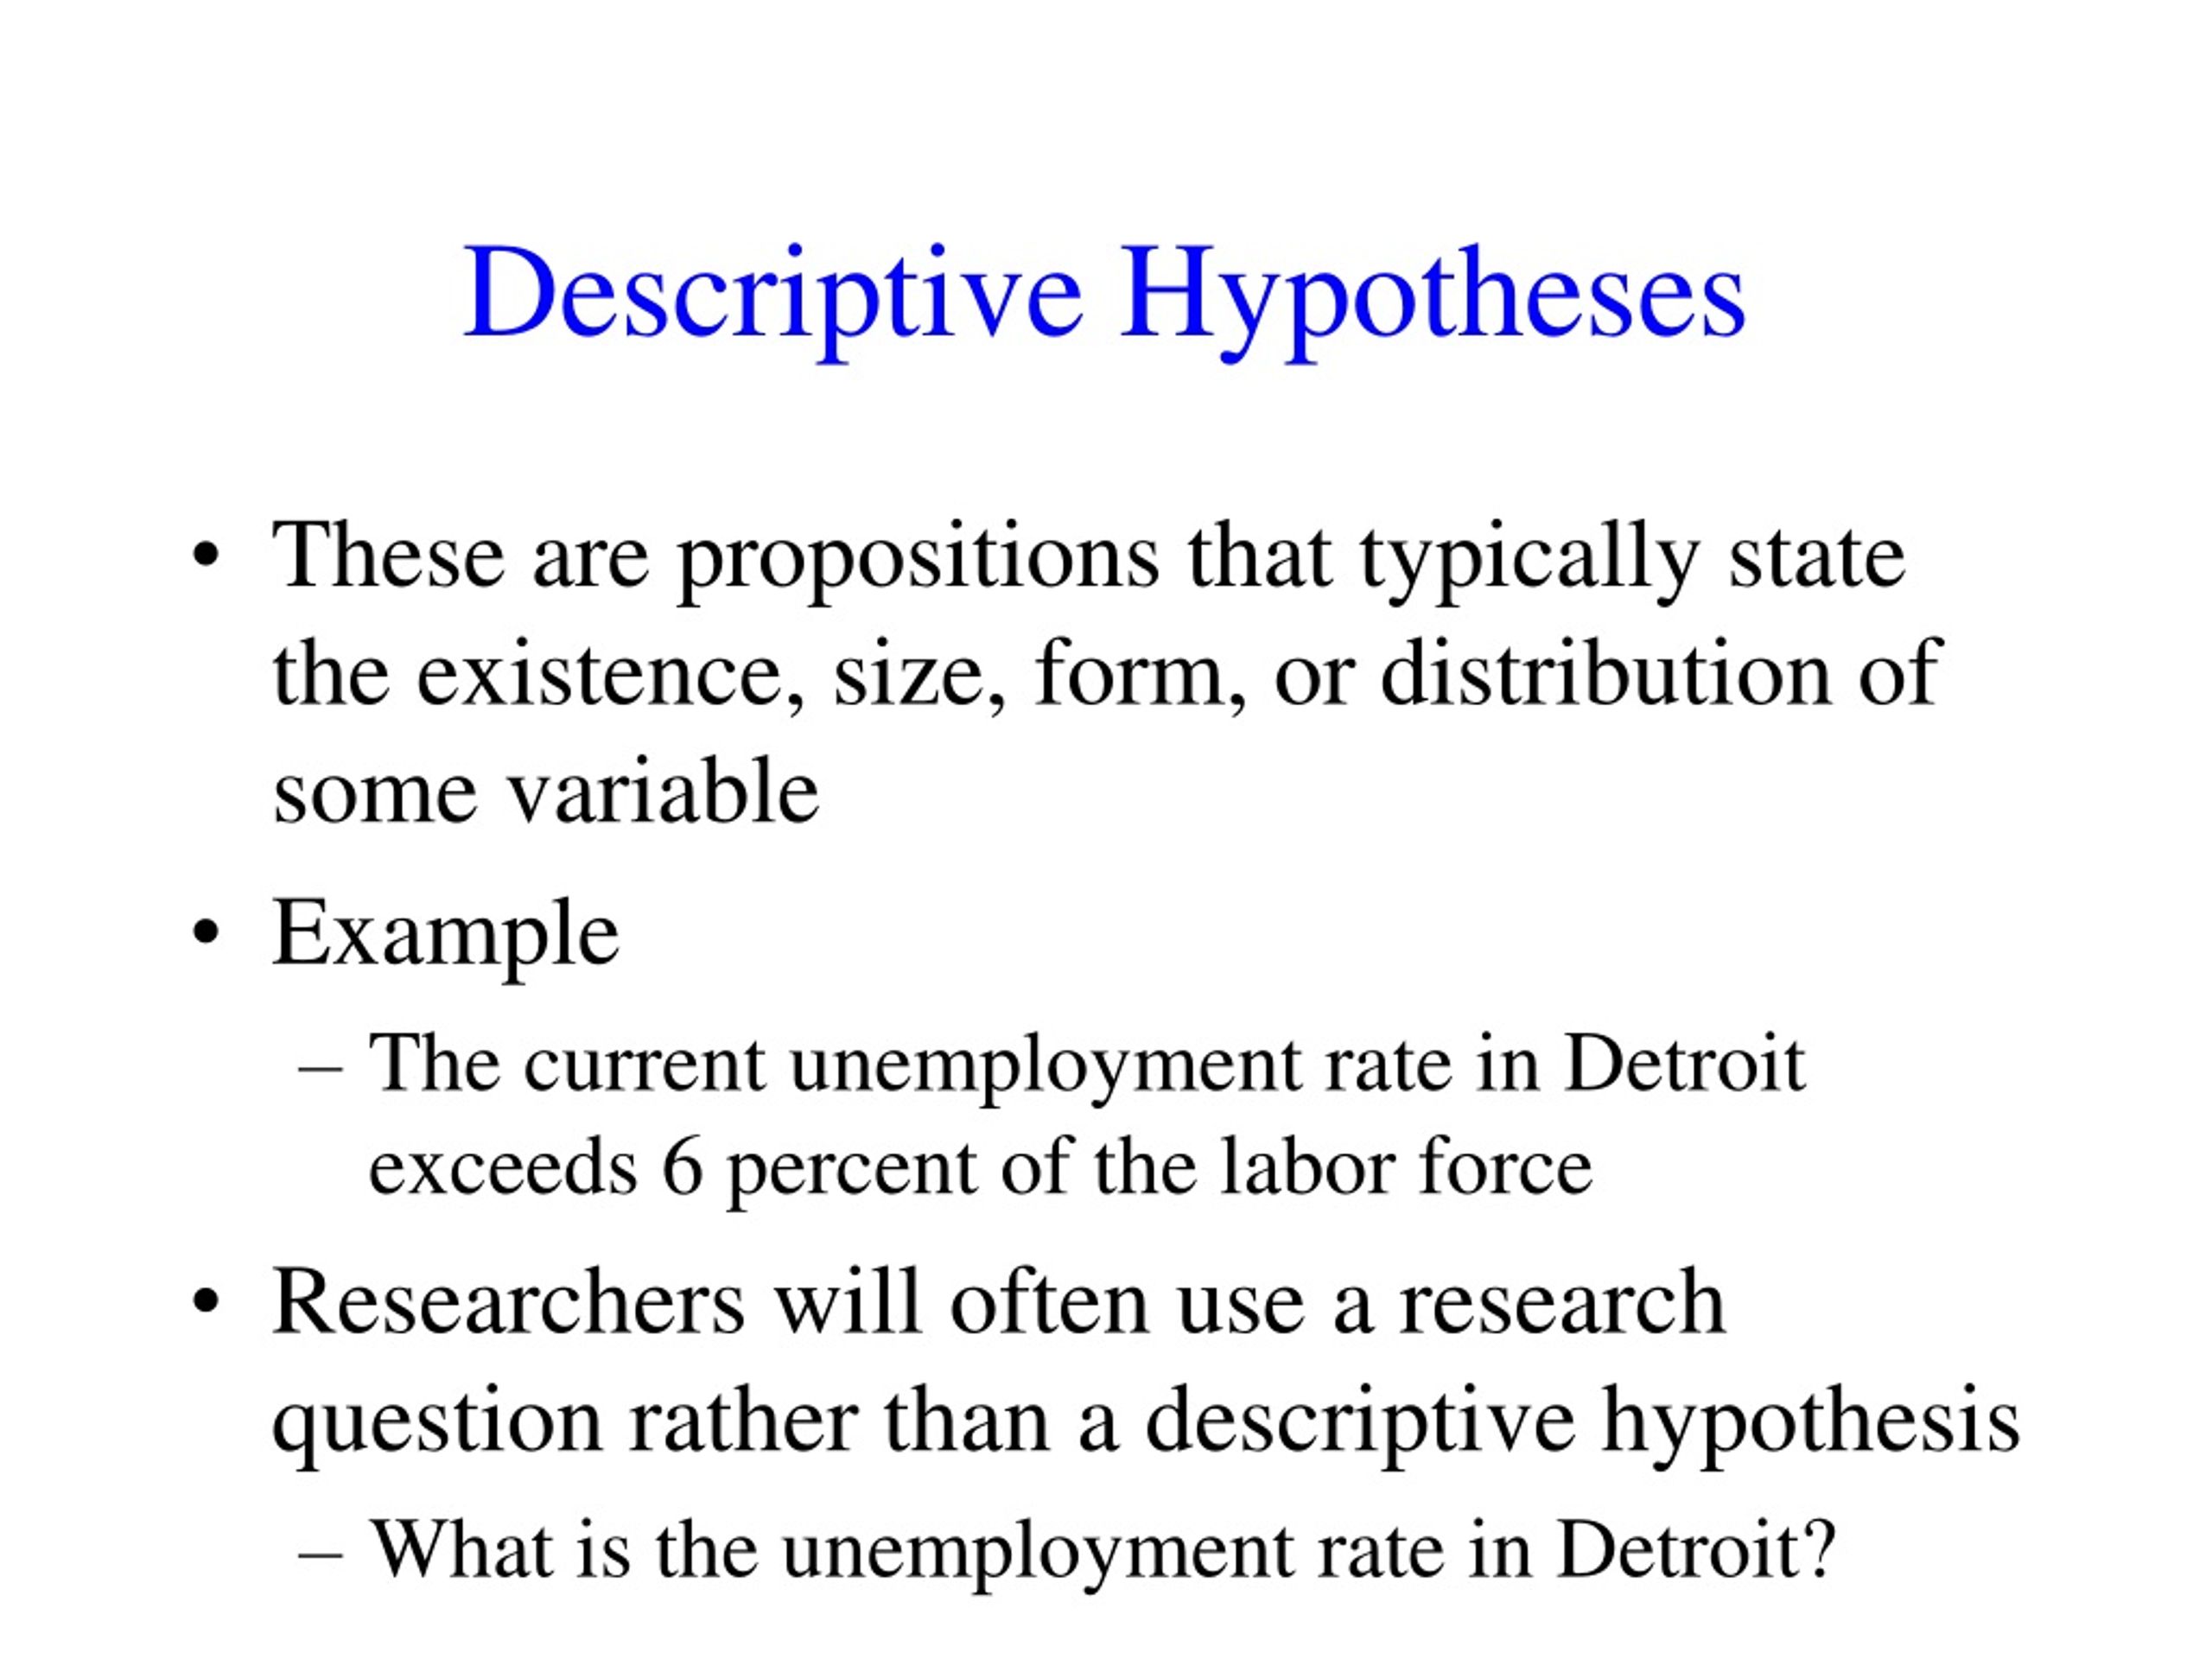 hypothesis in descriptive research